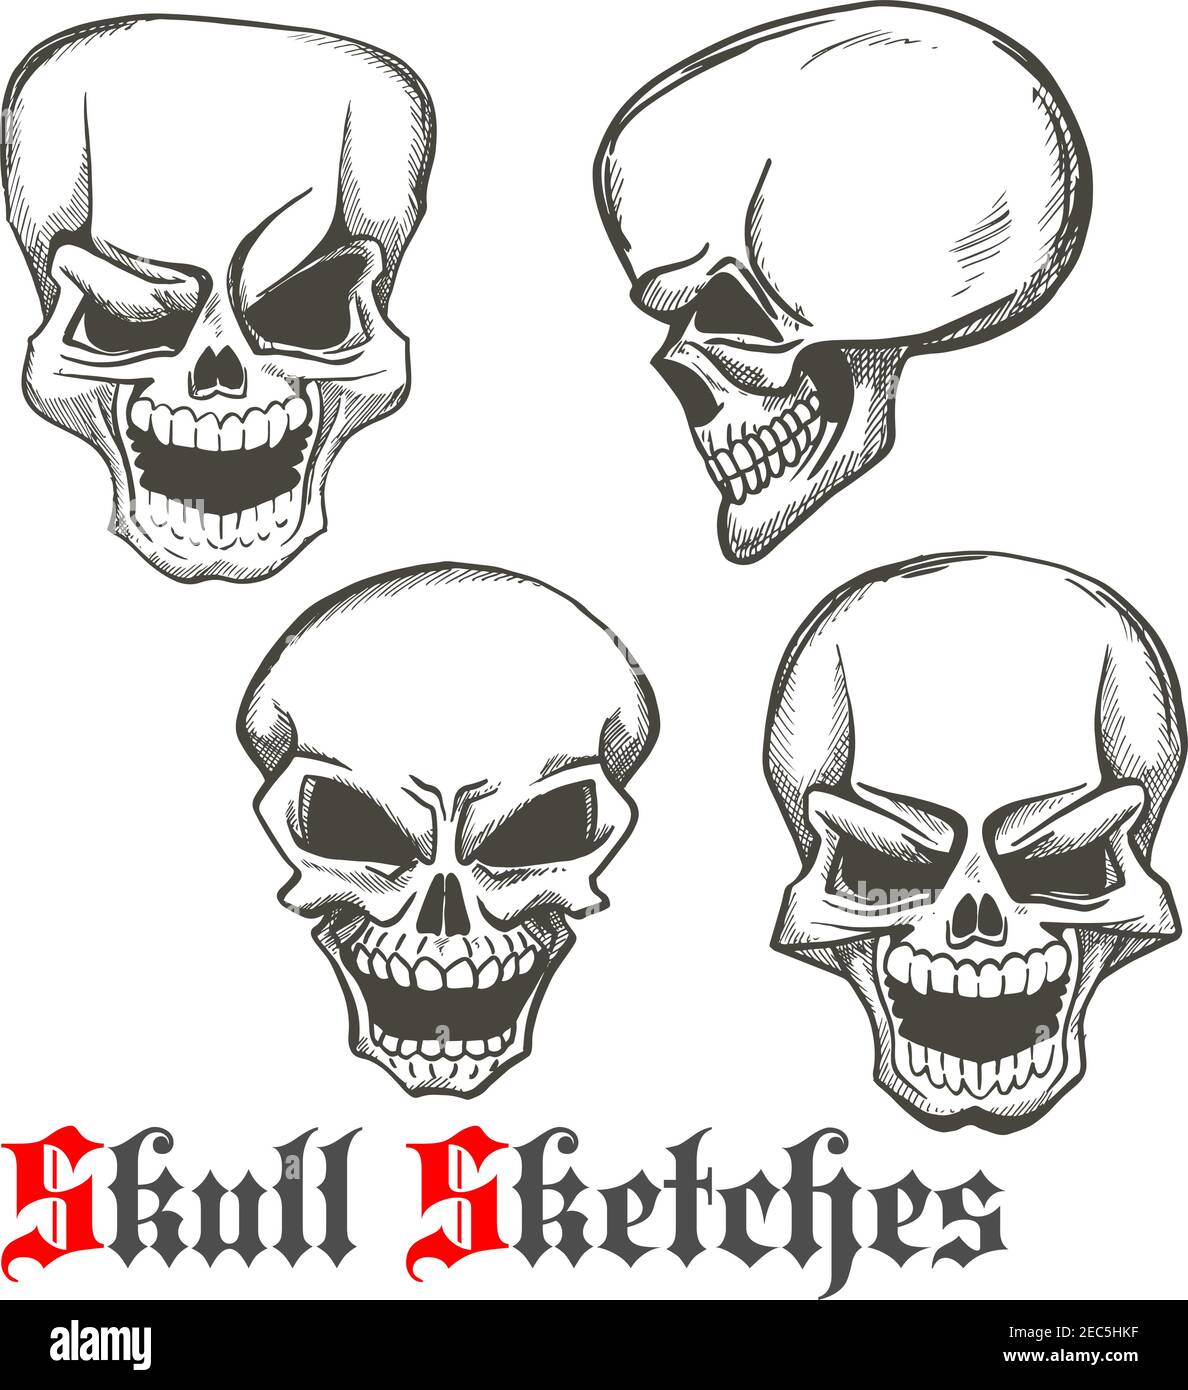 New School Skull And Roses Tattoo Idea  BlackInk